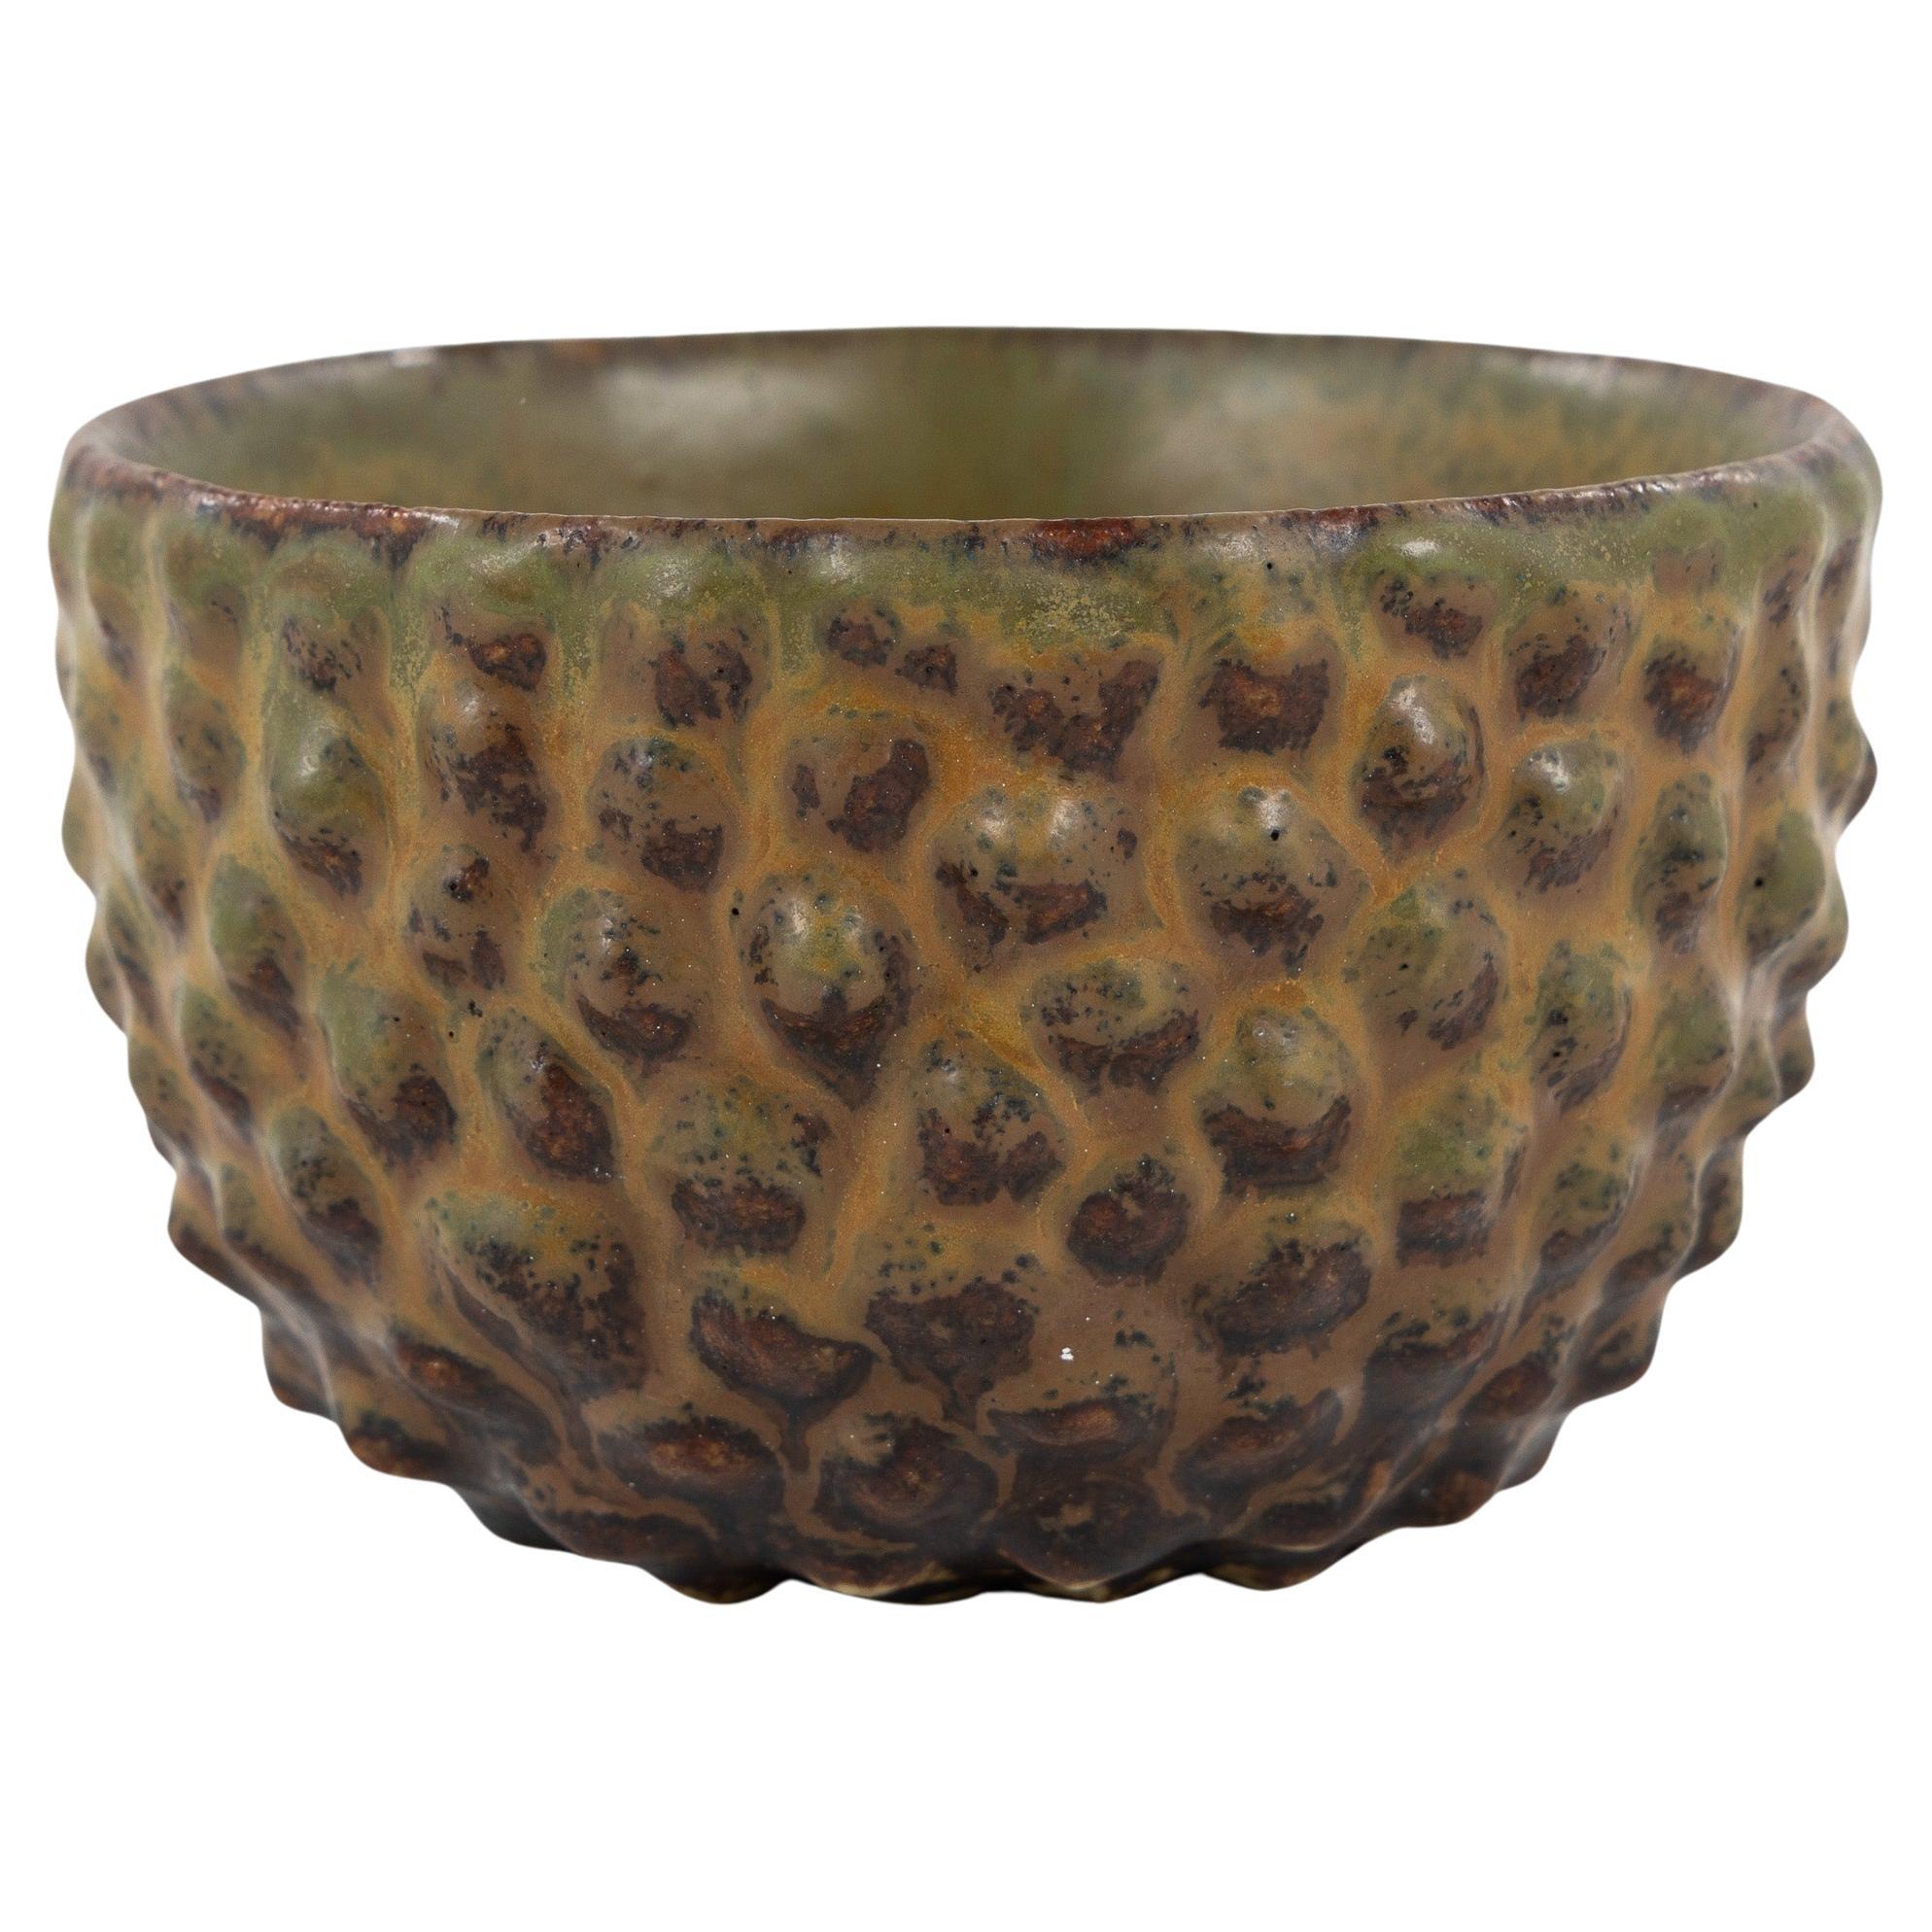 Glazed stoneware bowl by Axel Salto